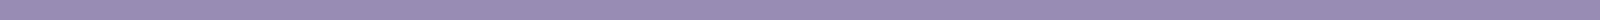 purple banner 2.jpg